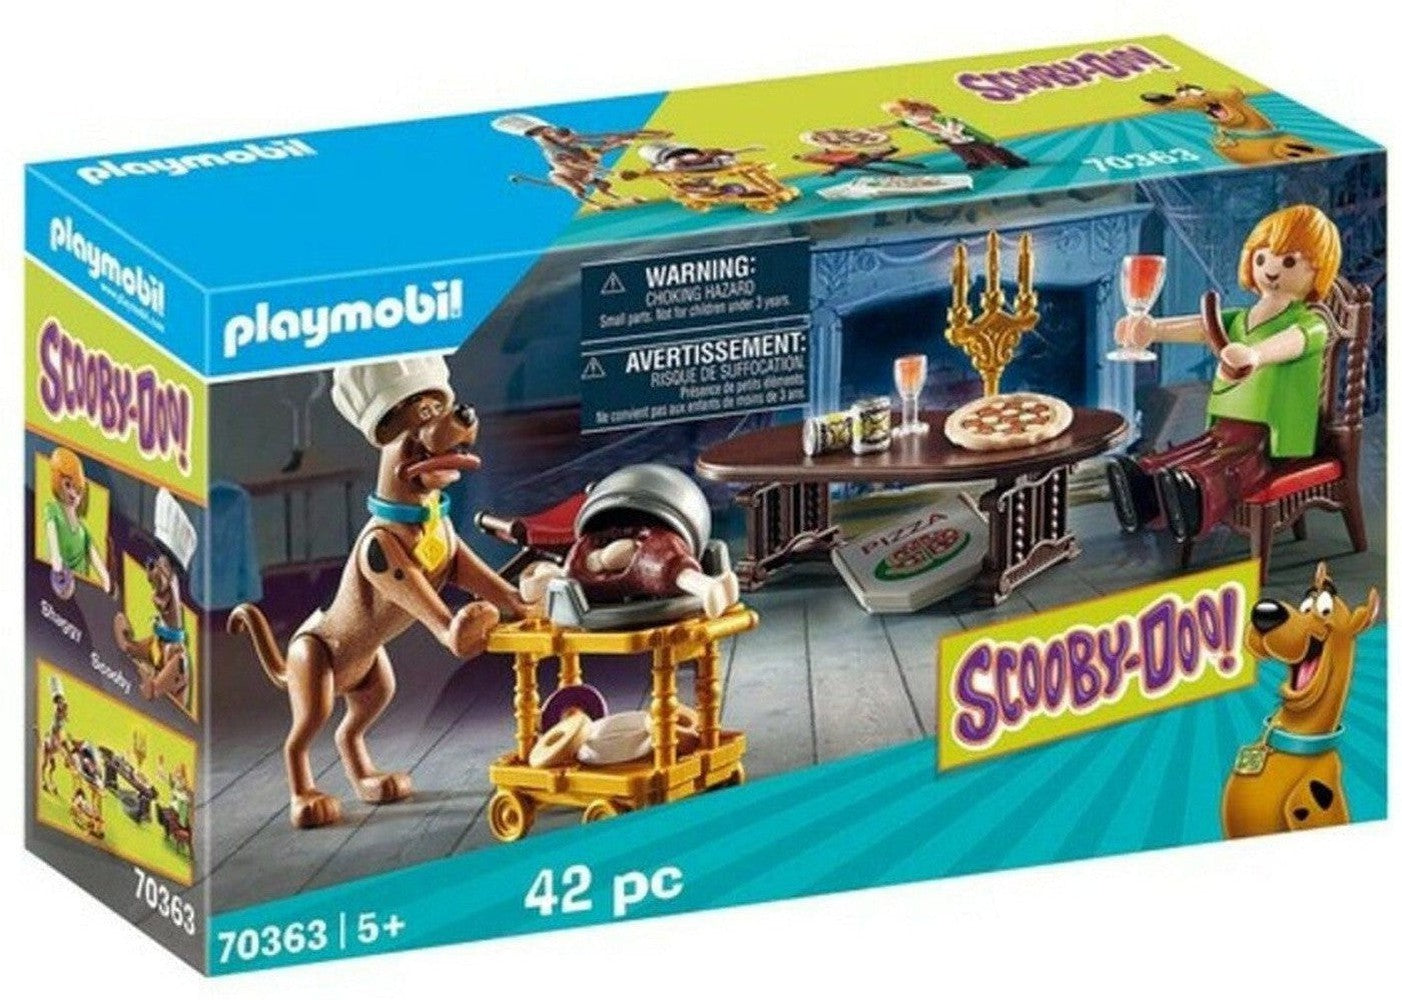 Playset Scooby-Doo! Shaggy Playmobil 70363 (42 PC)